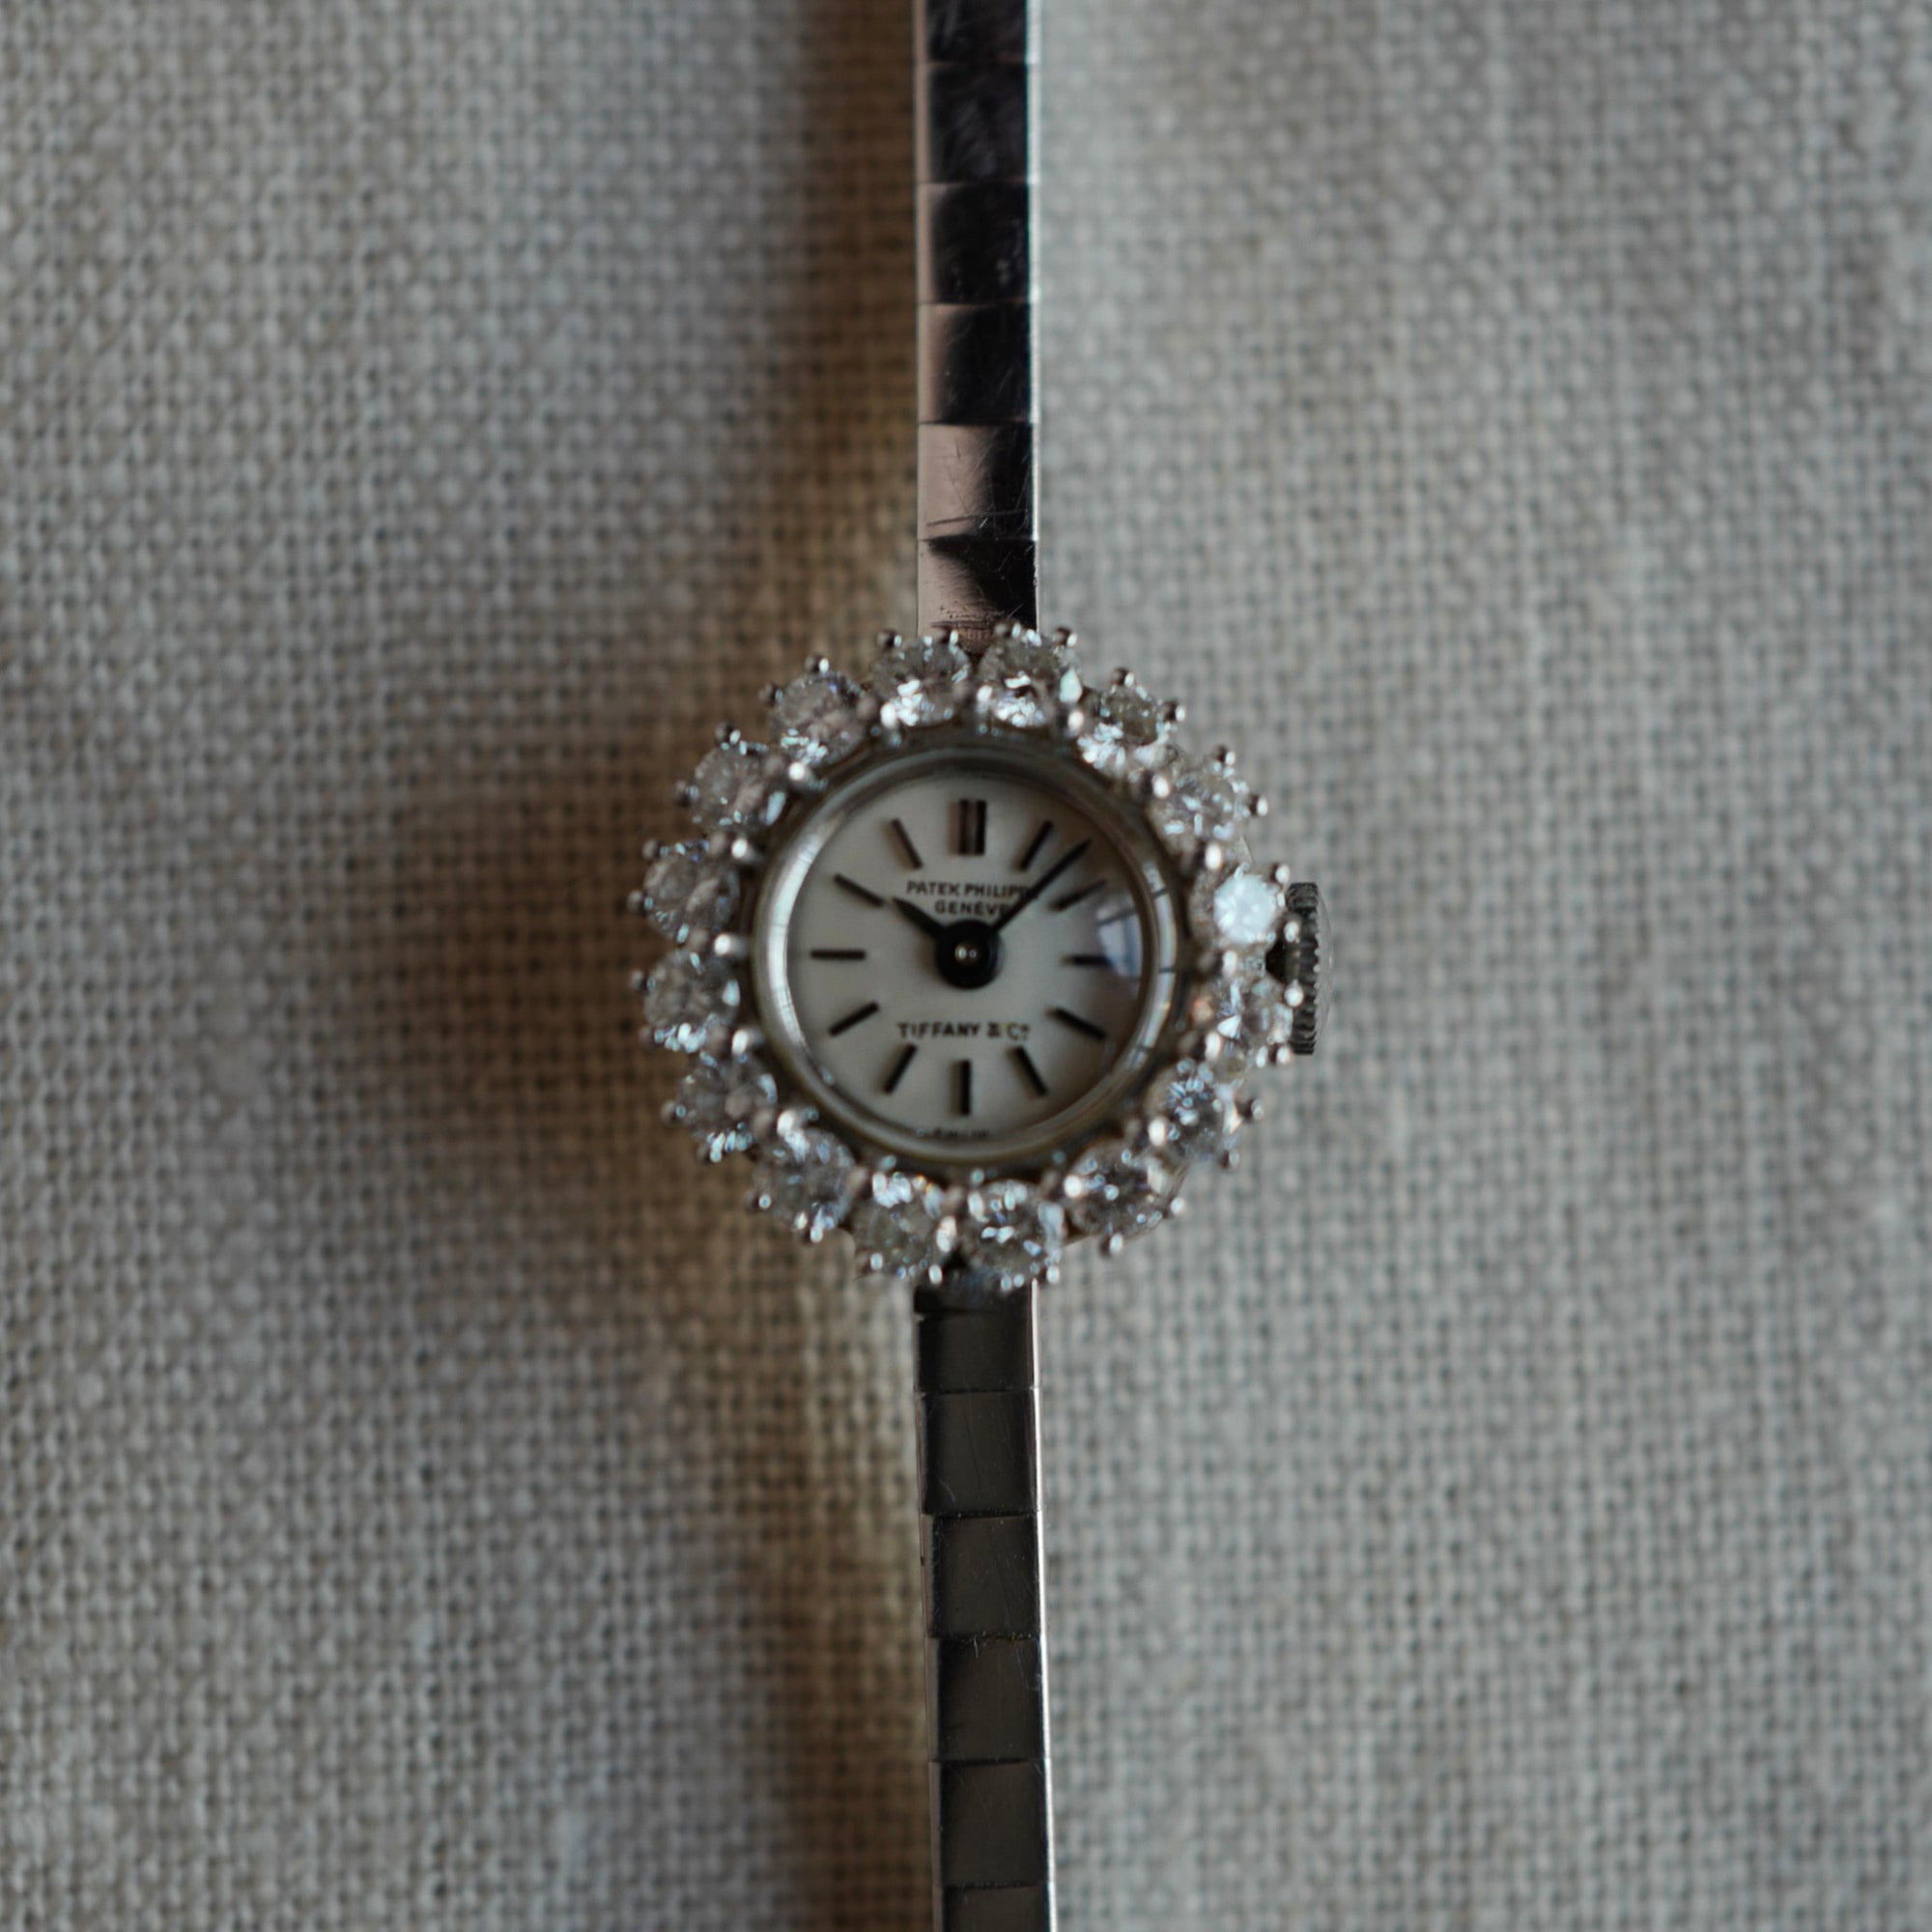 Patek Philippe - Patek Philippe Platinum Diamond Watch Ref. 3289, Retailed by Tiffany & Co. (NEW ARRIVAL) - The Keystone Watches